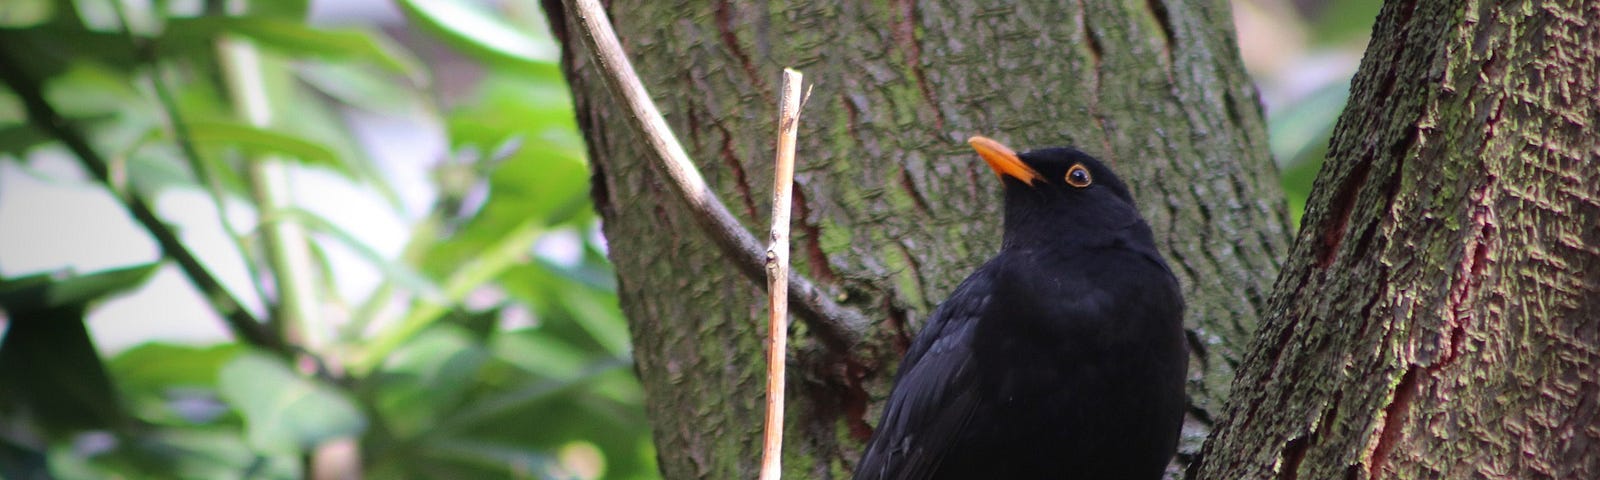 Black bird on a tree